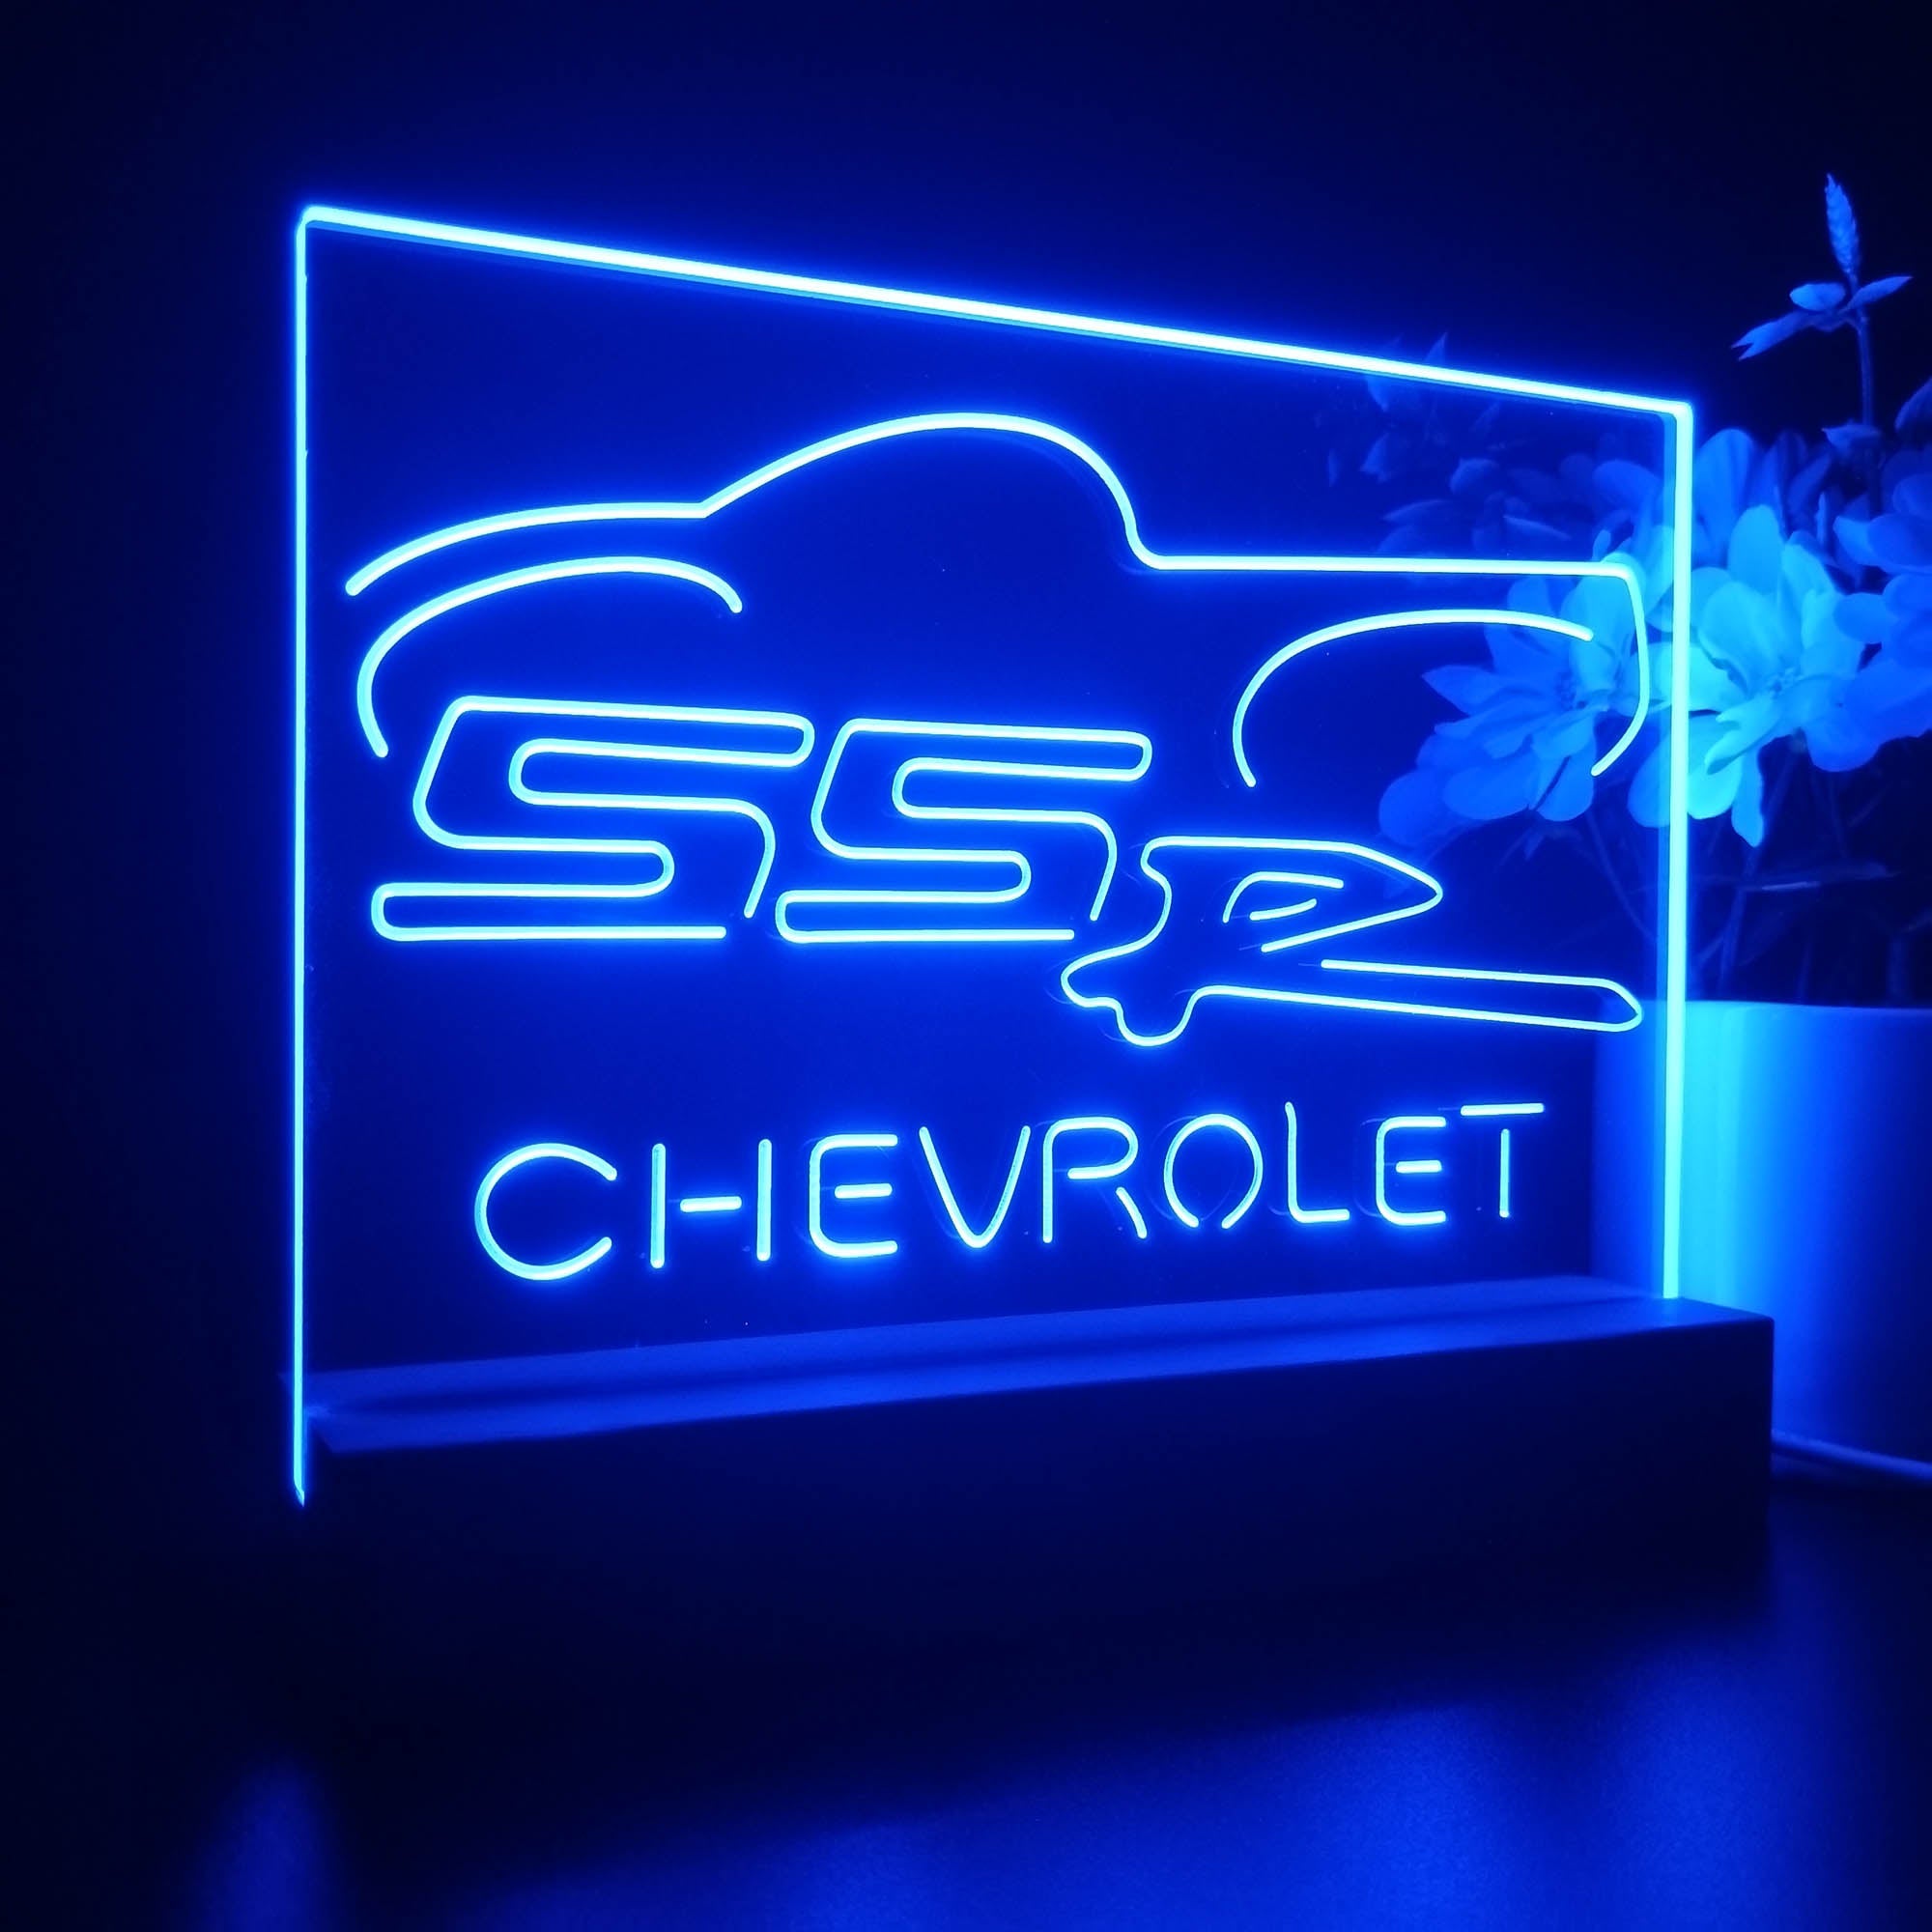 SSR Chevrolet Car 3D LED Illusion Night Light